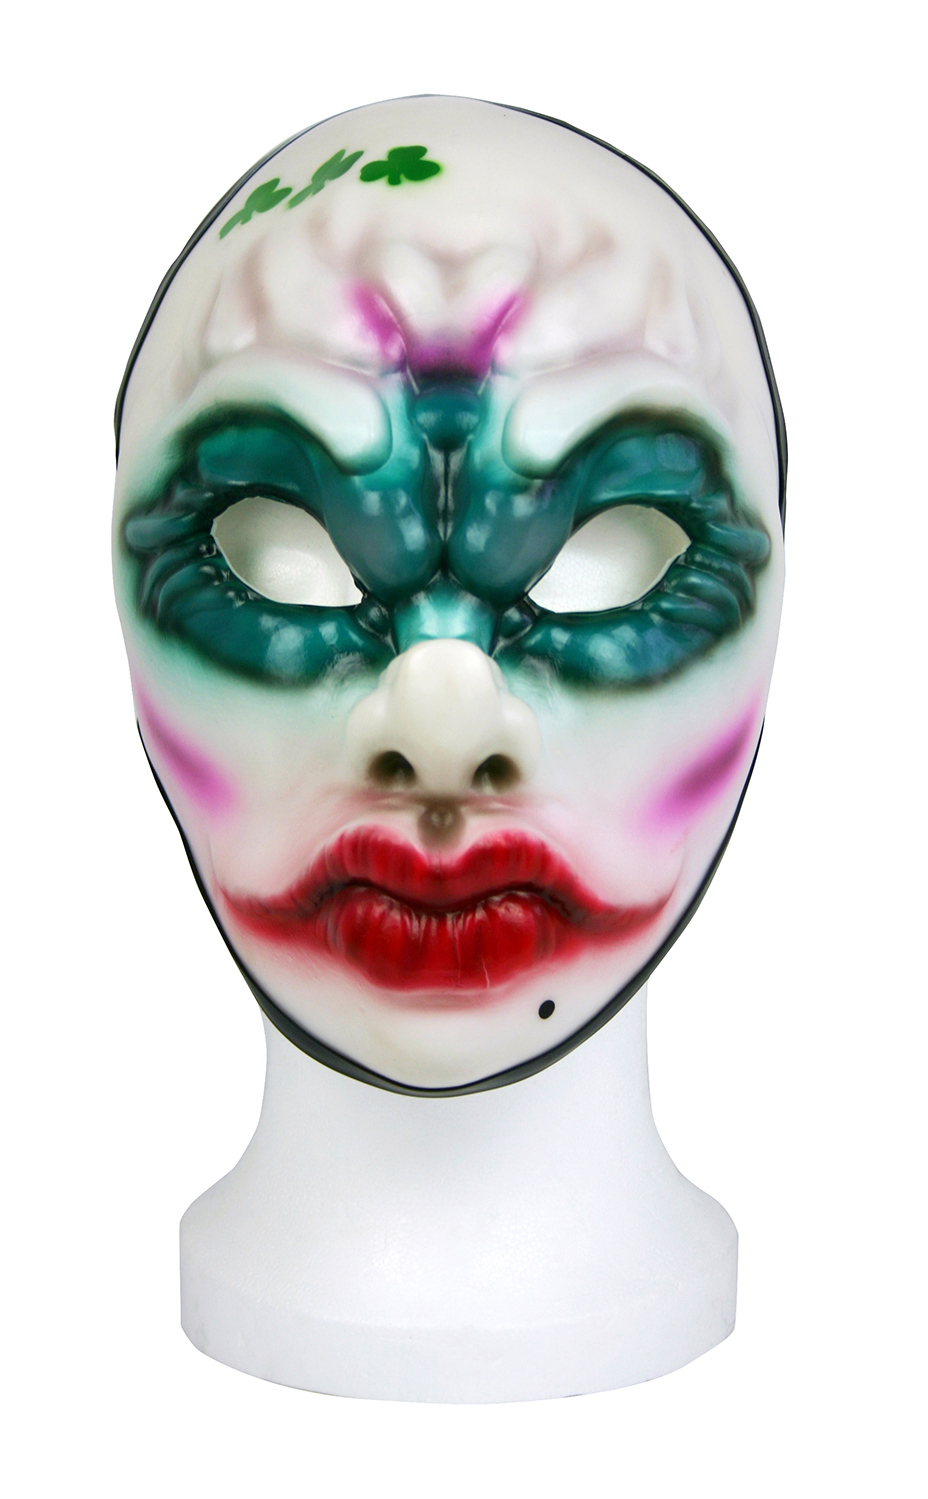 ENTERTAINMENT Maske Mask 2 Face GAYA Payday Clover